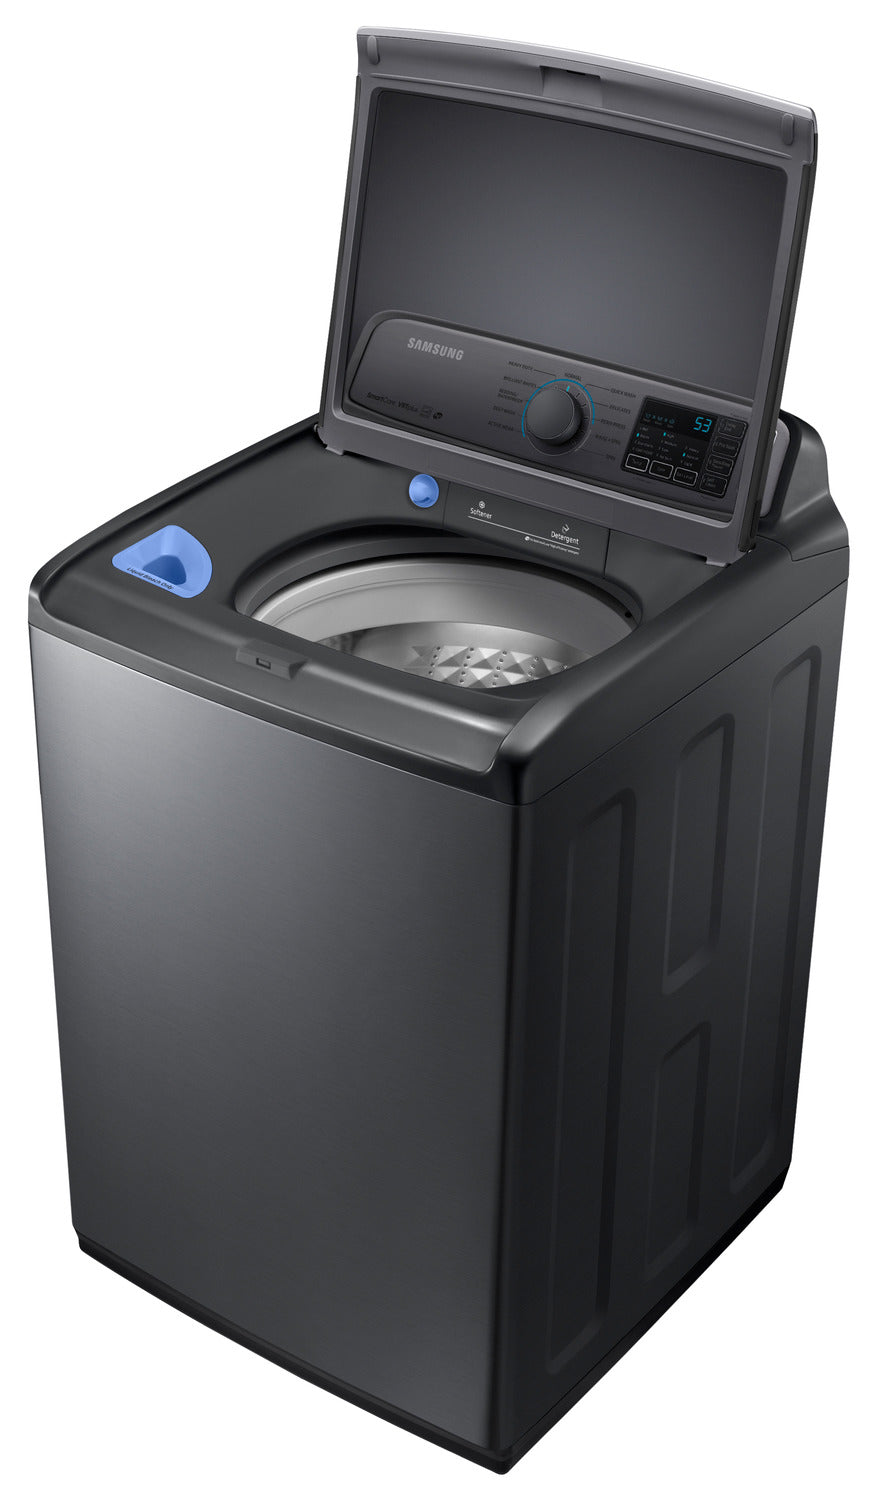 Samsung Platinum Top-Load Washer (5.8 Cu. Ft. IEC) - WA50M7450AP